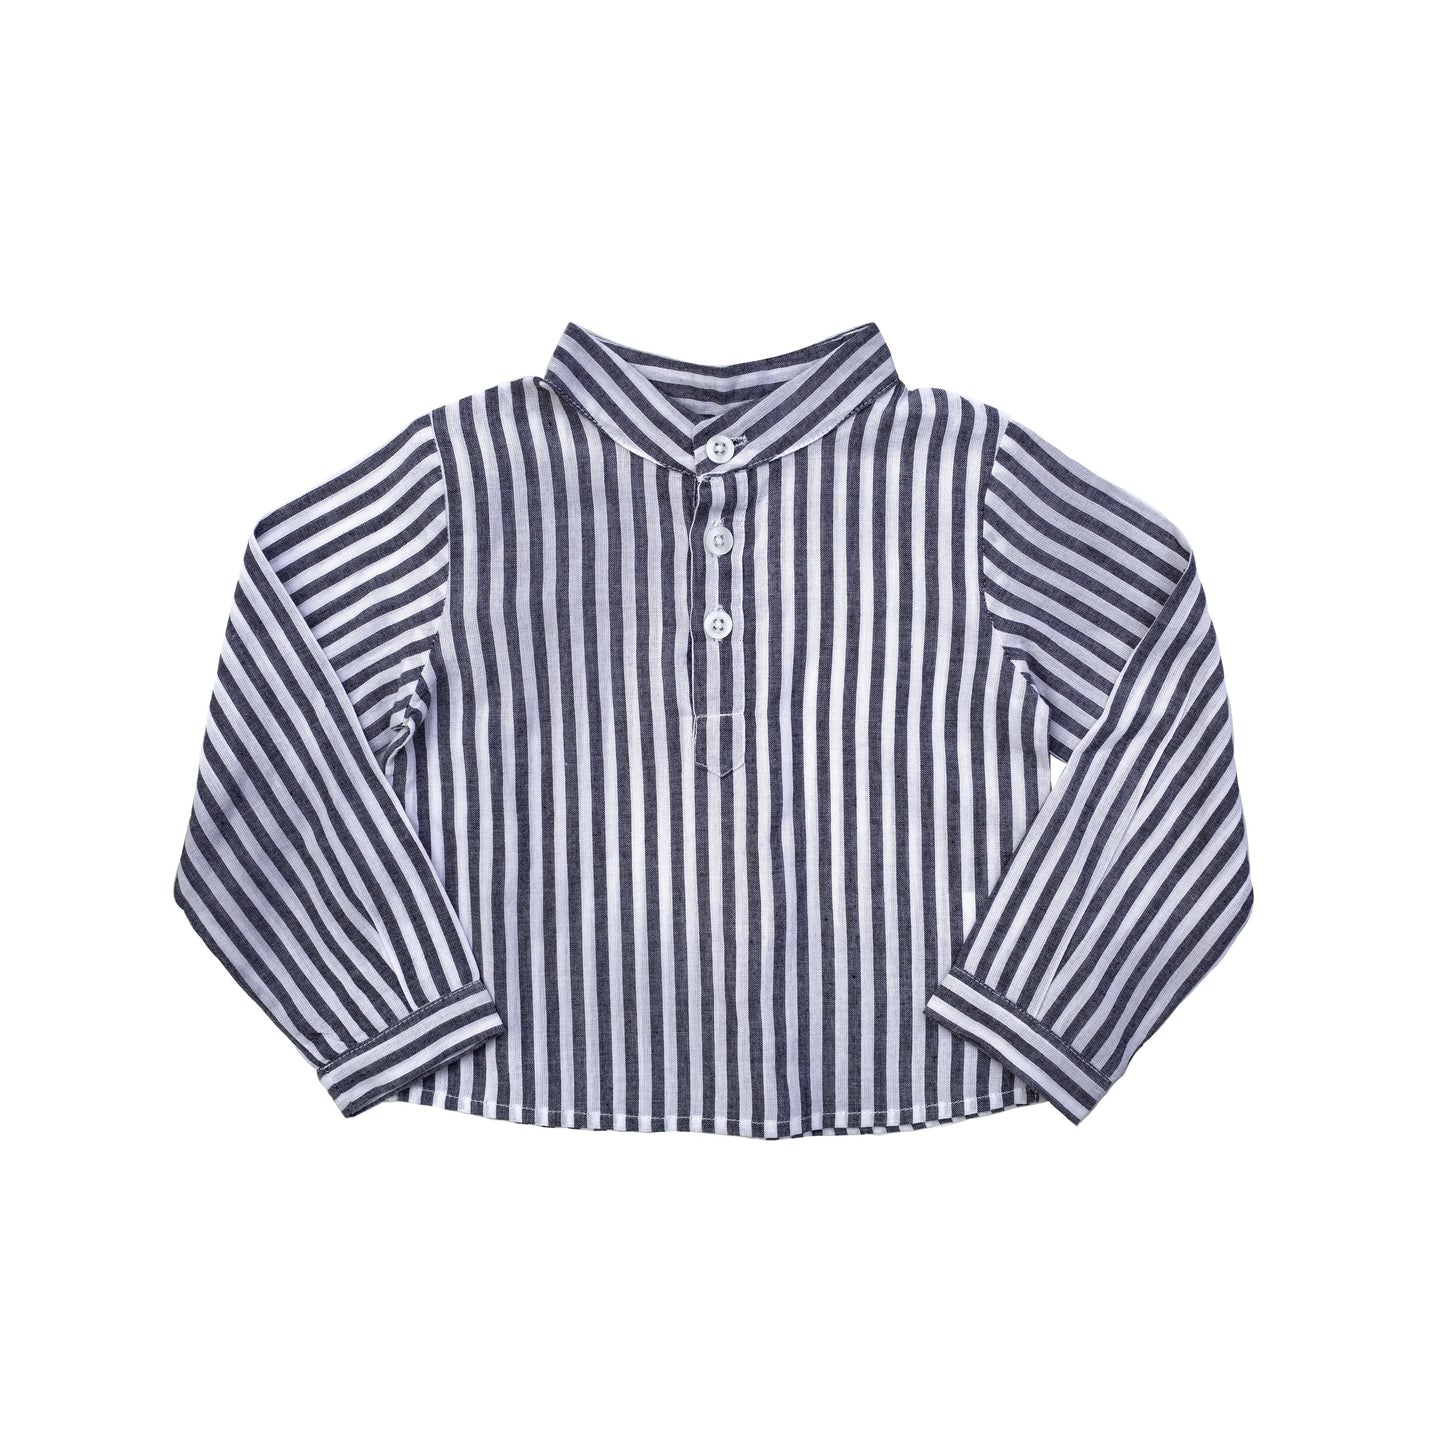 Boys French collar shirt | Harbor Island stripe